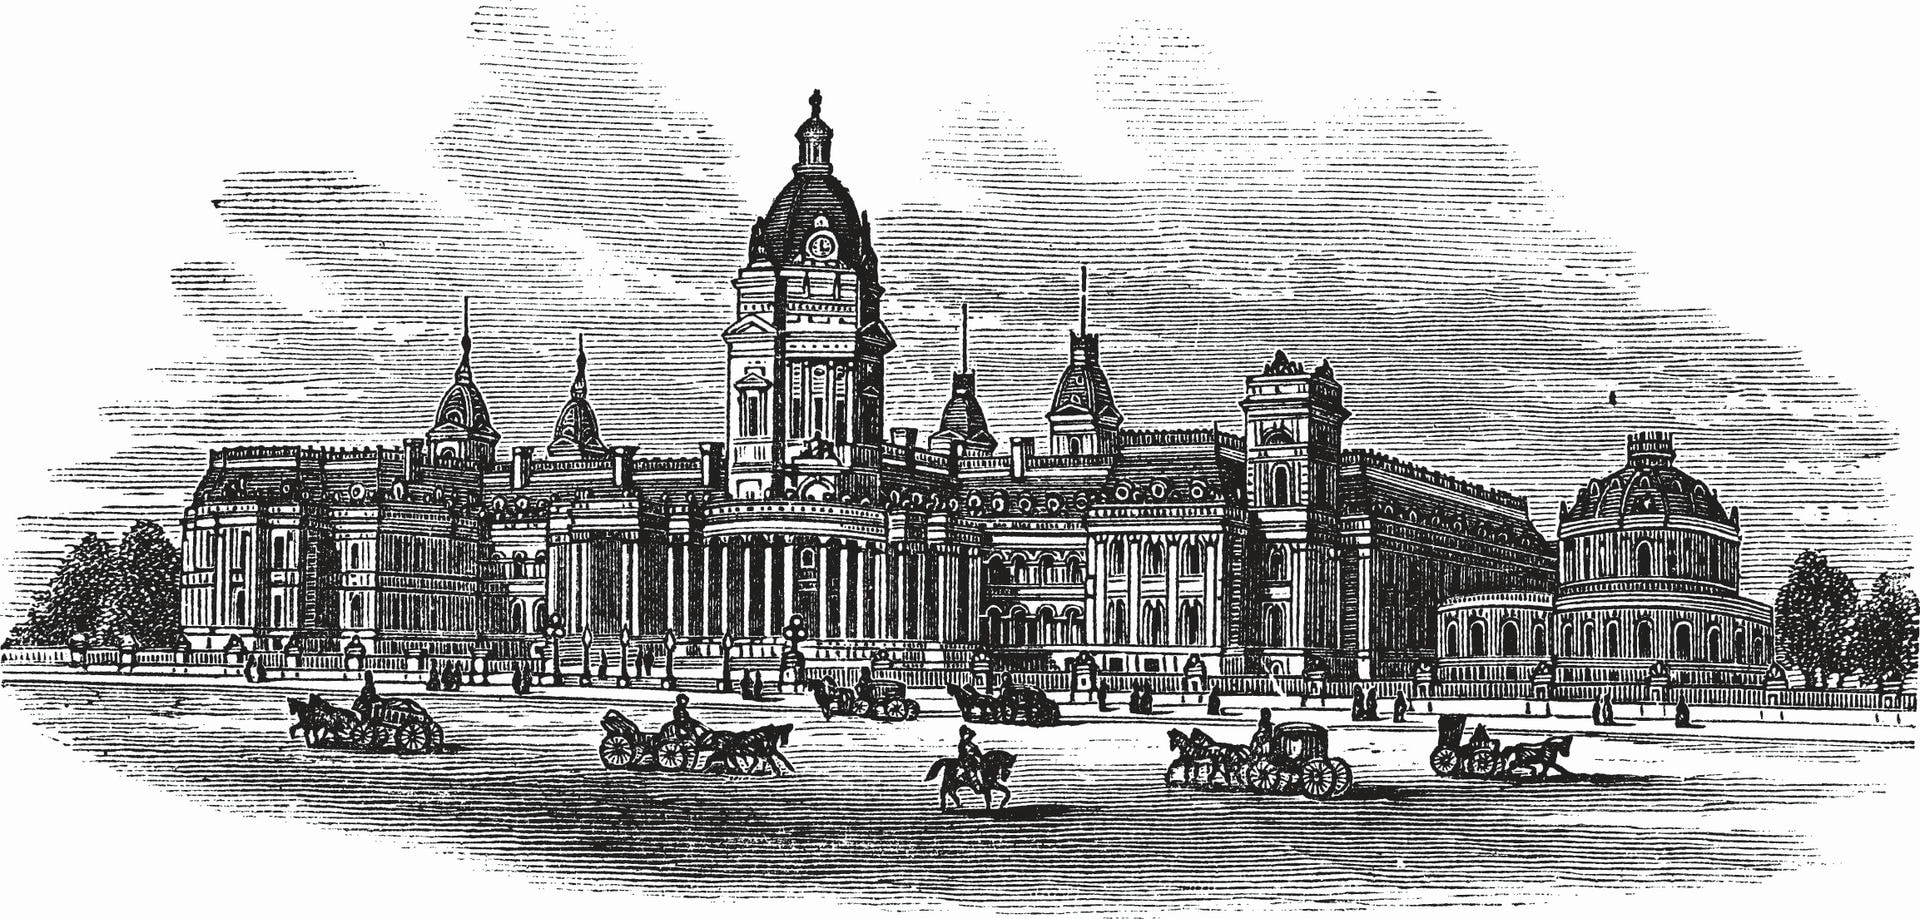 San Francisco City Hall in America vintage engraving